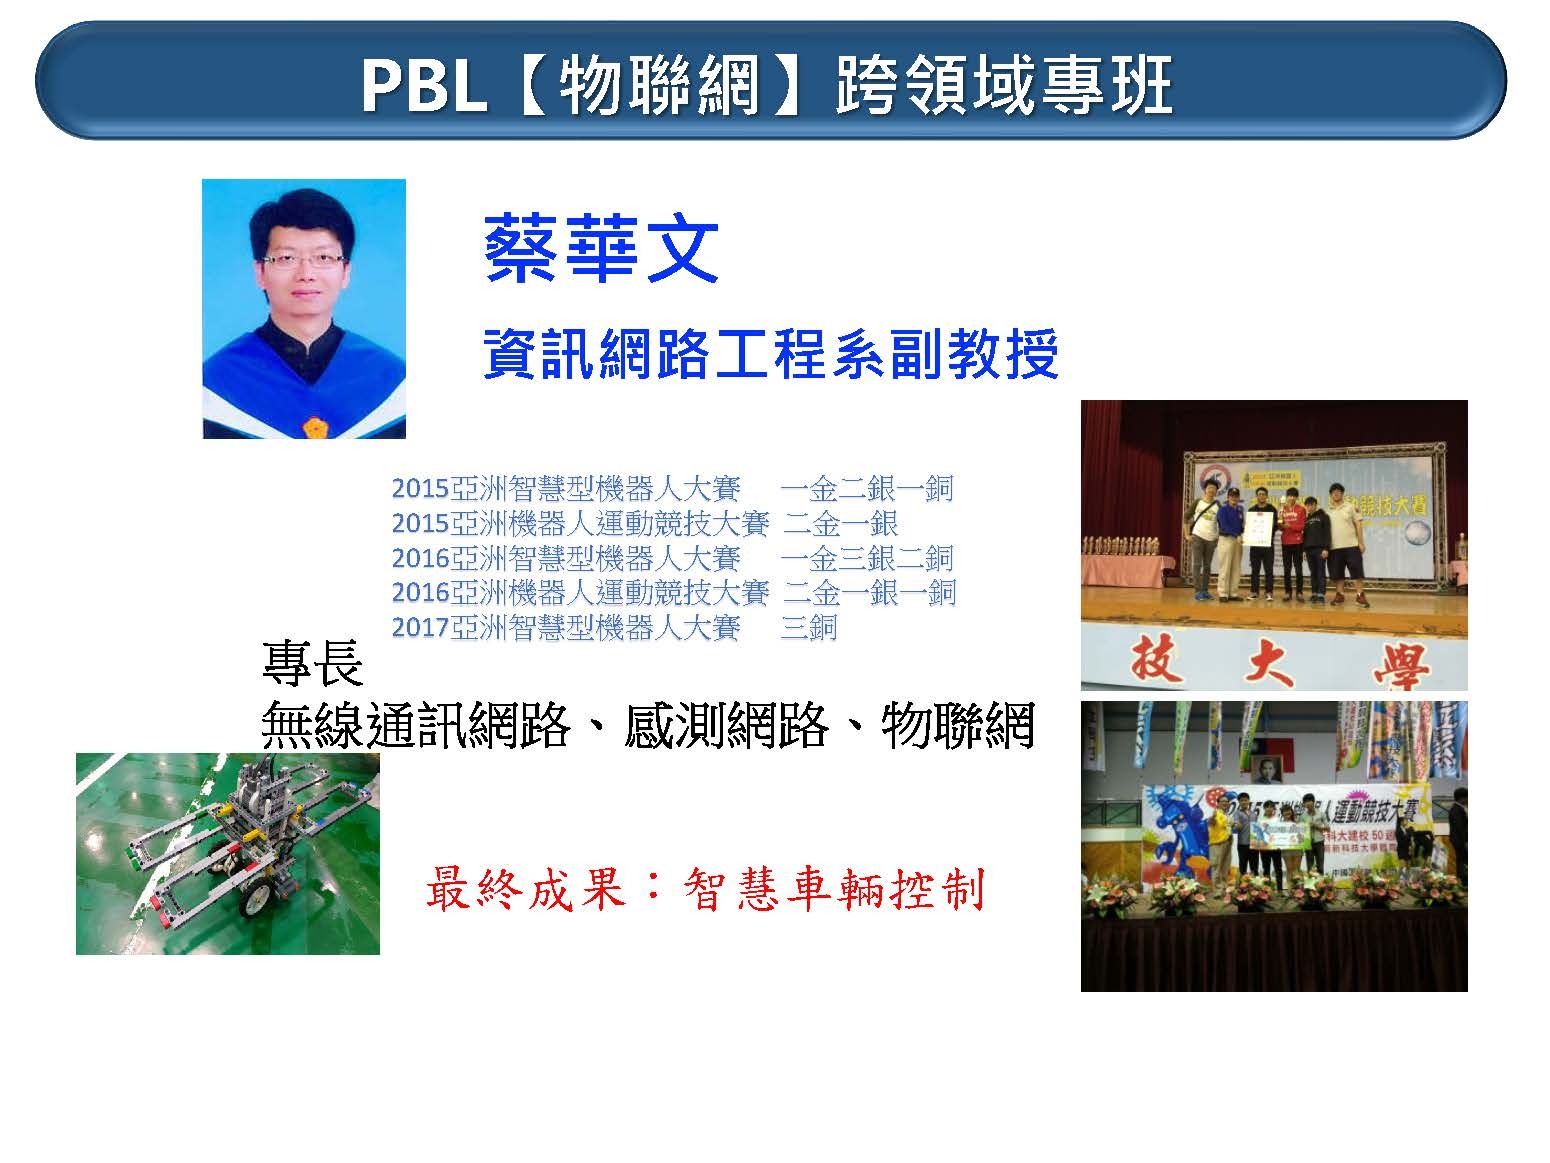 ▲PBL(物聯網)跨領域專班指導老師蔡華文簡介示意圖